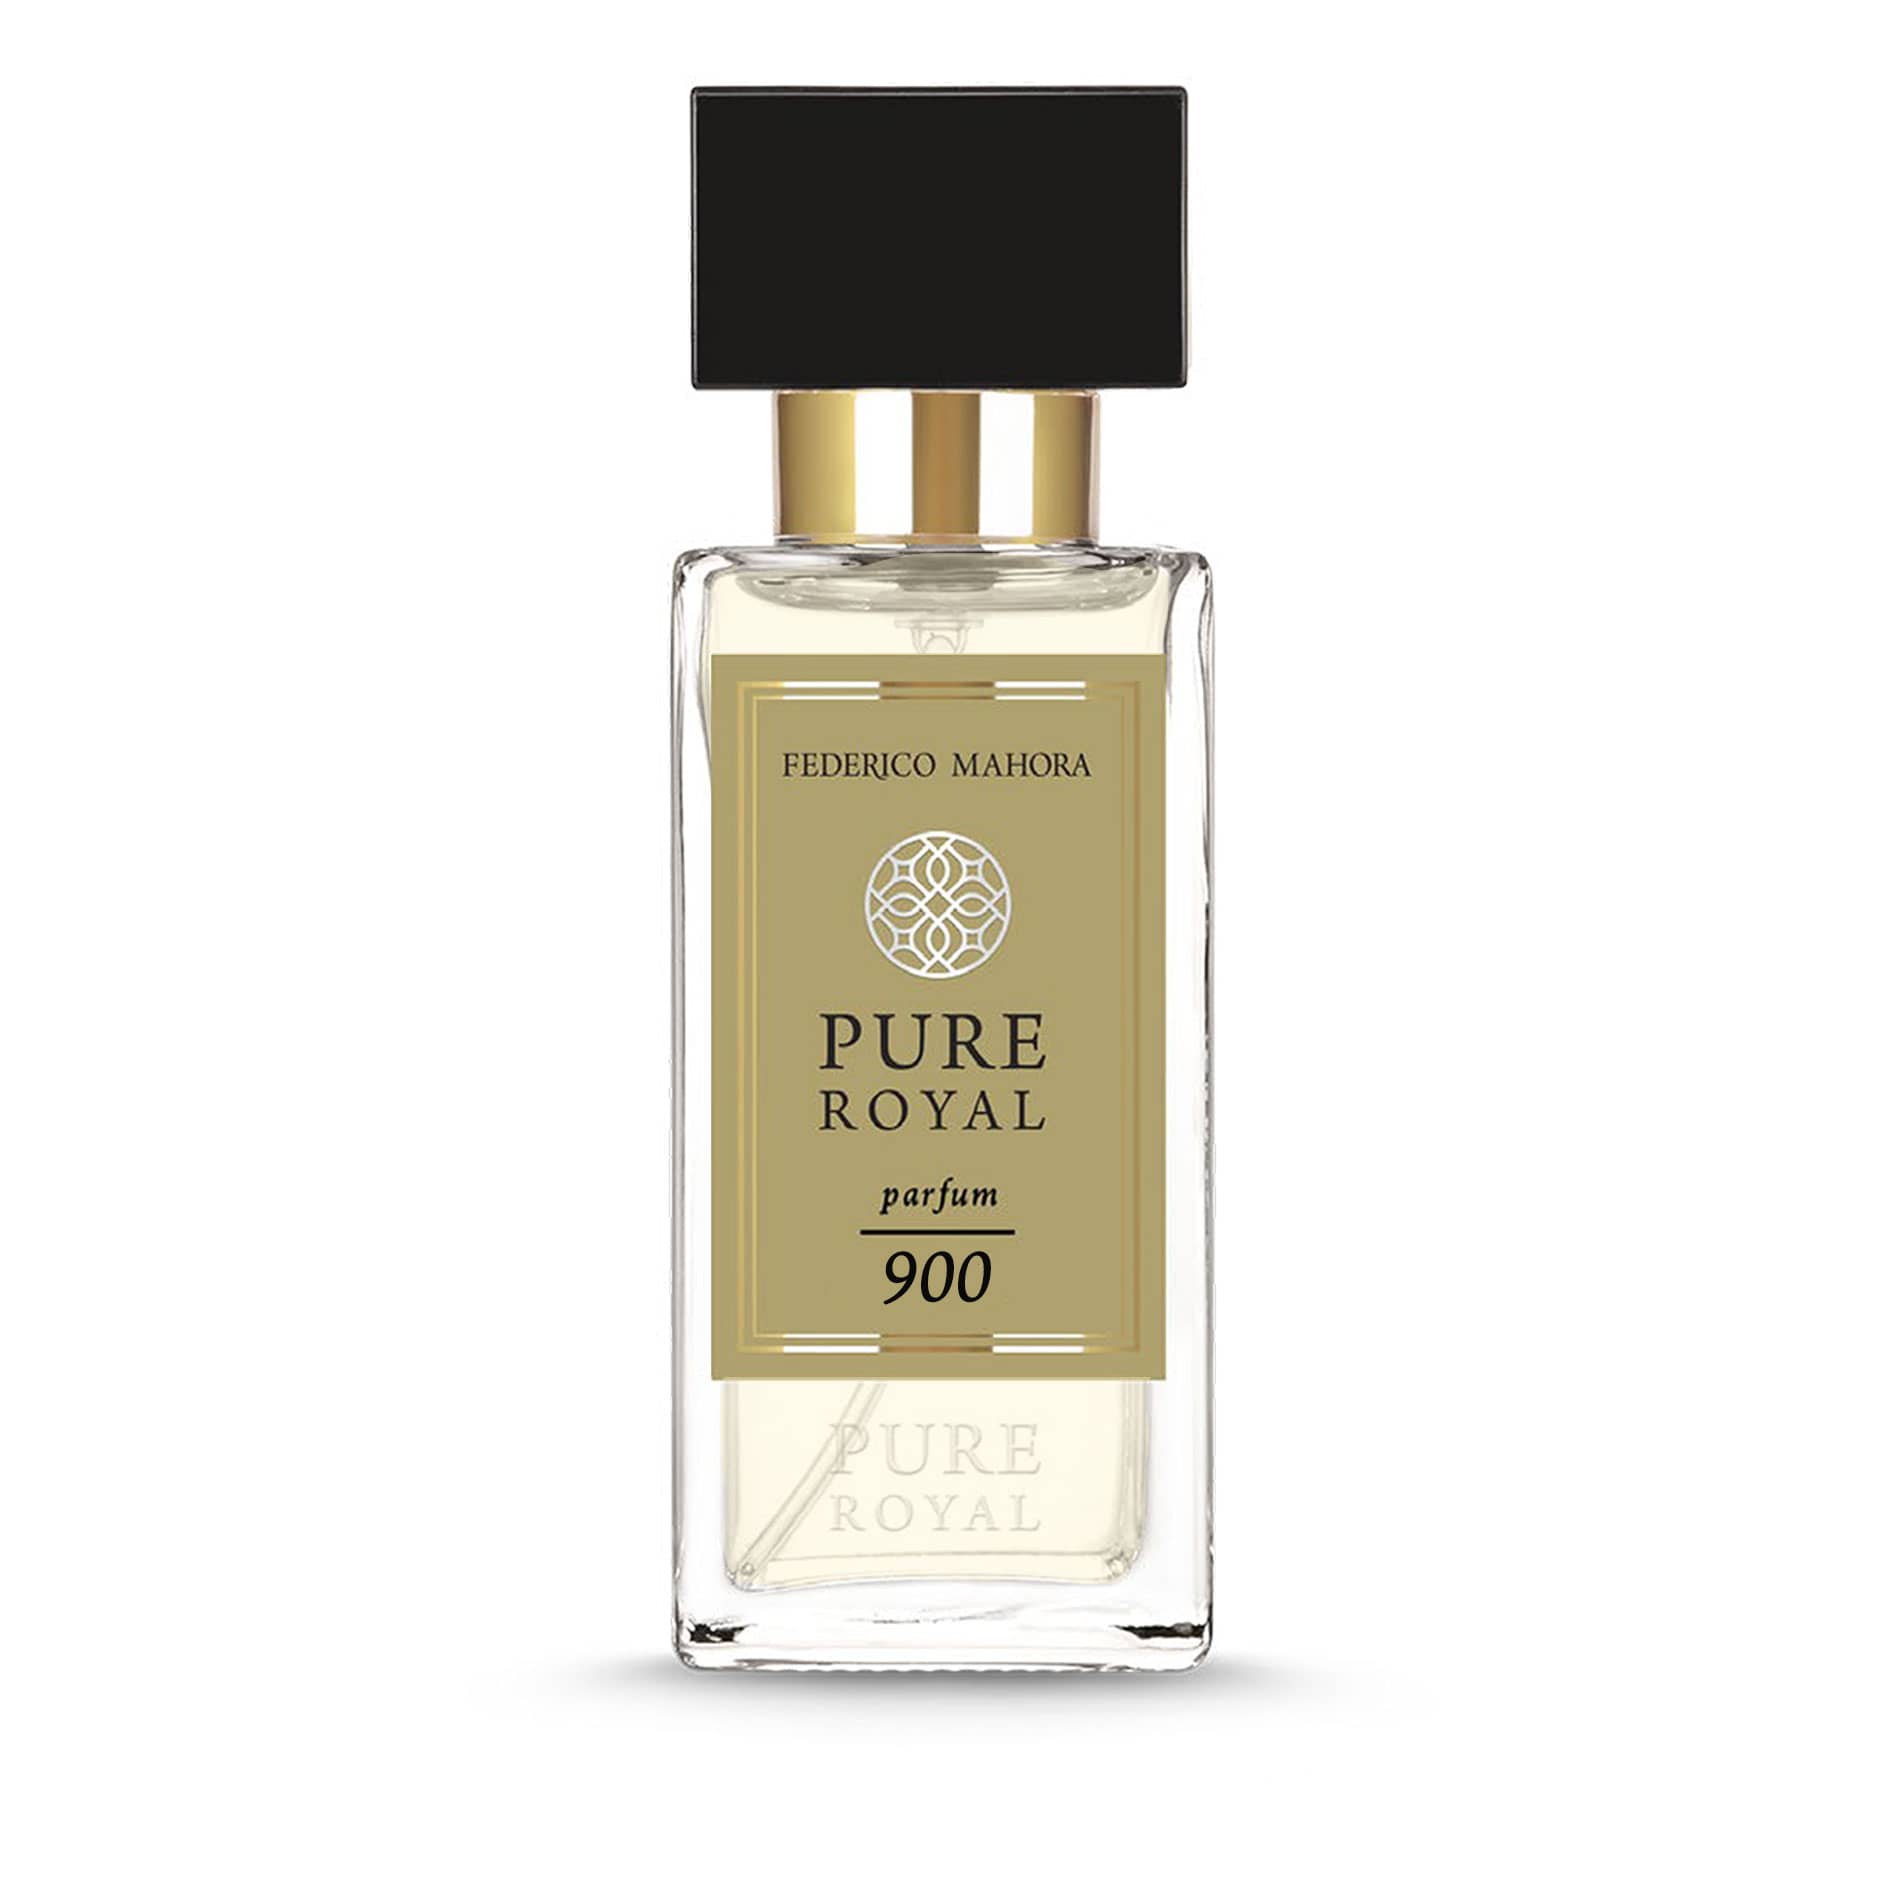 PURE ROYAL 900 Parfum Federico Mahora